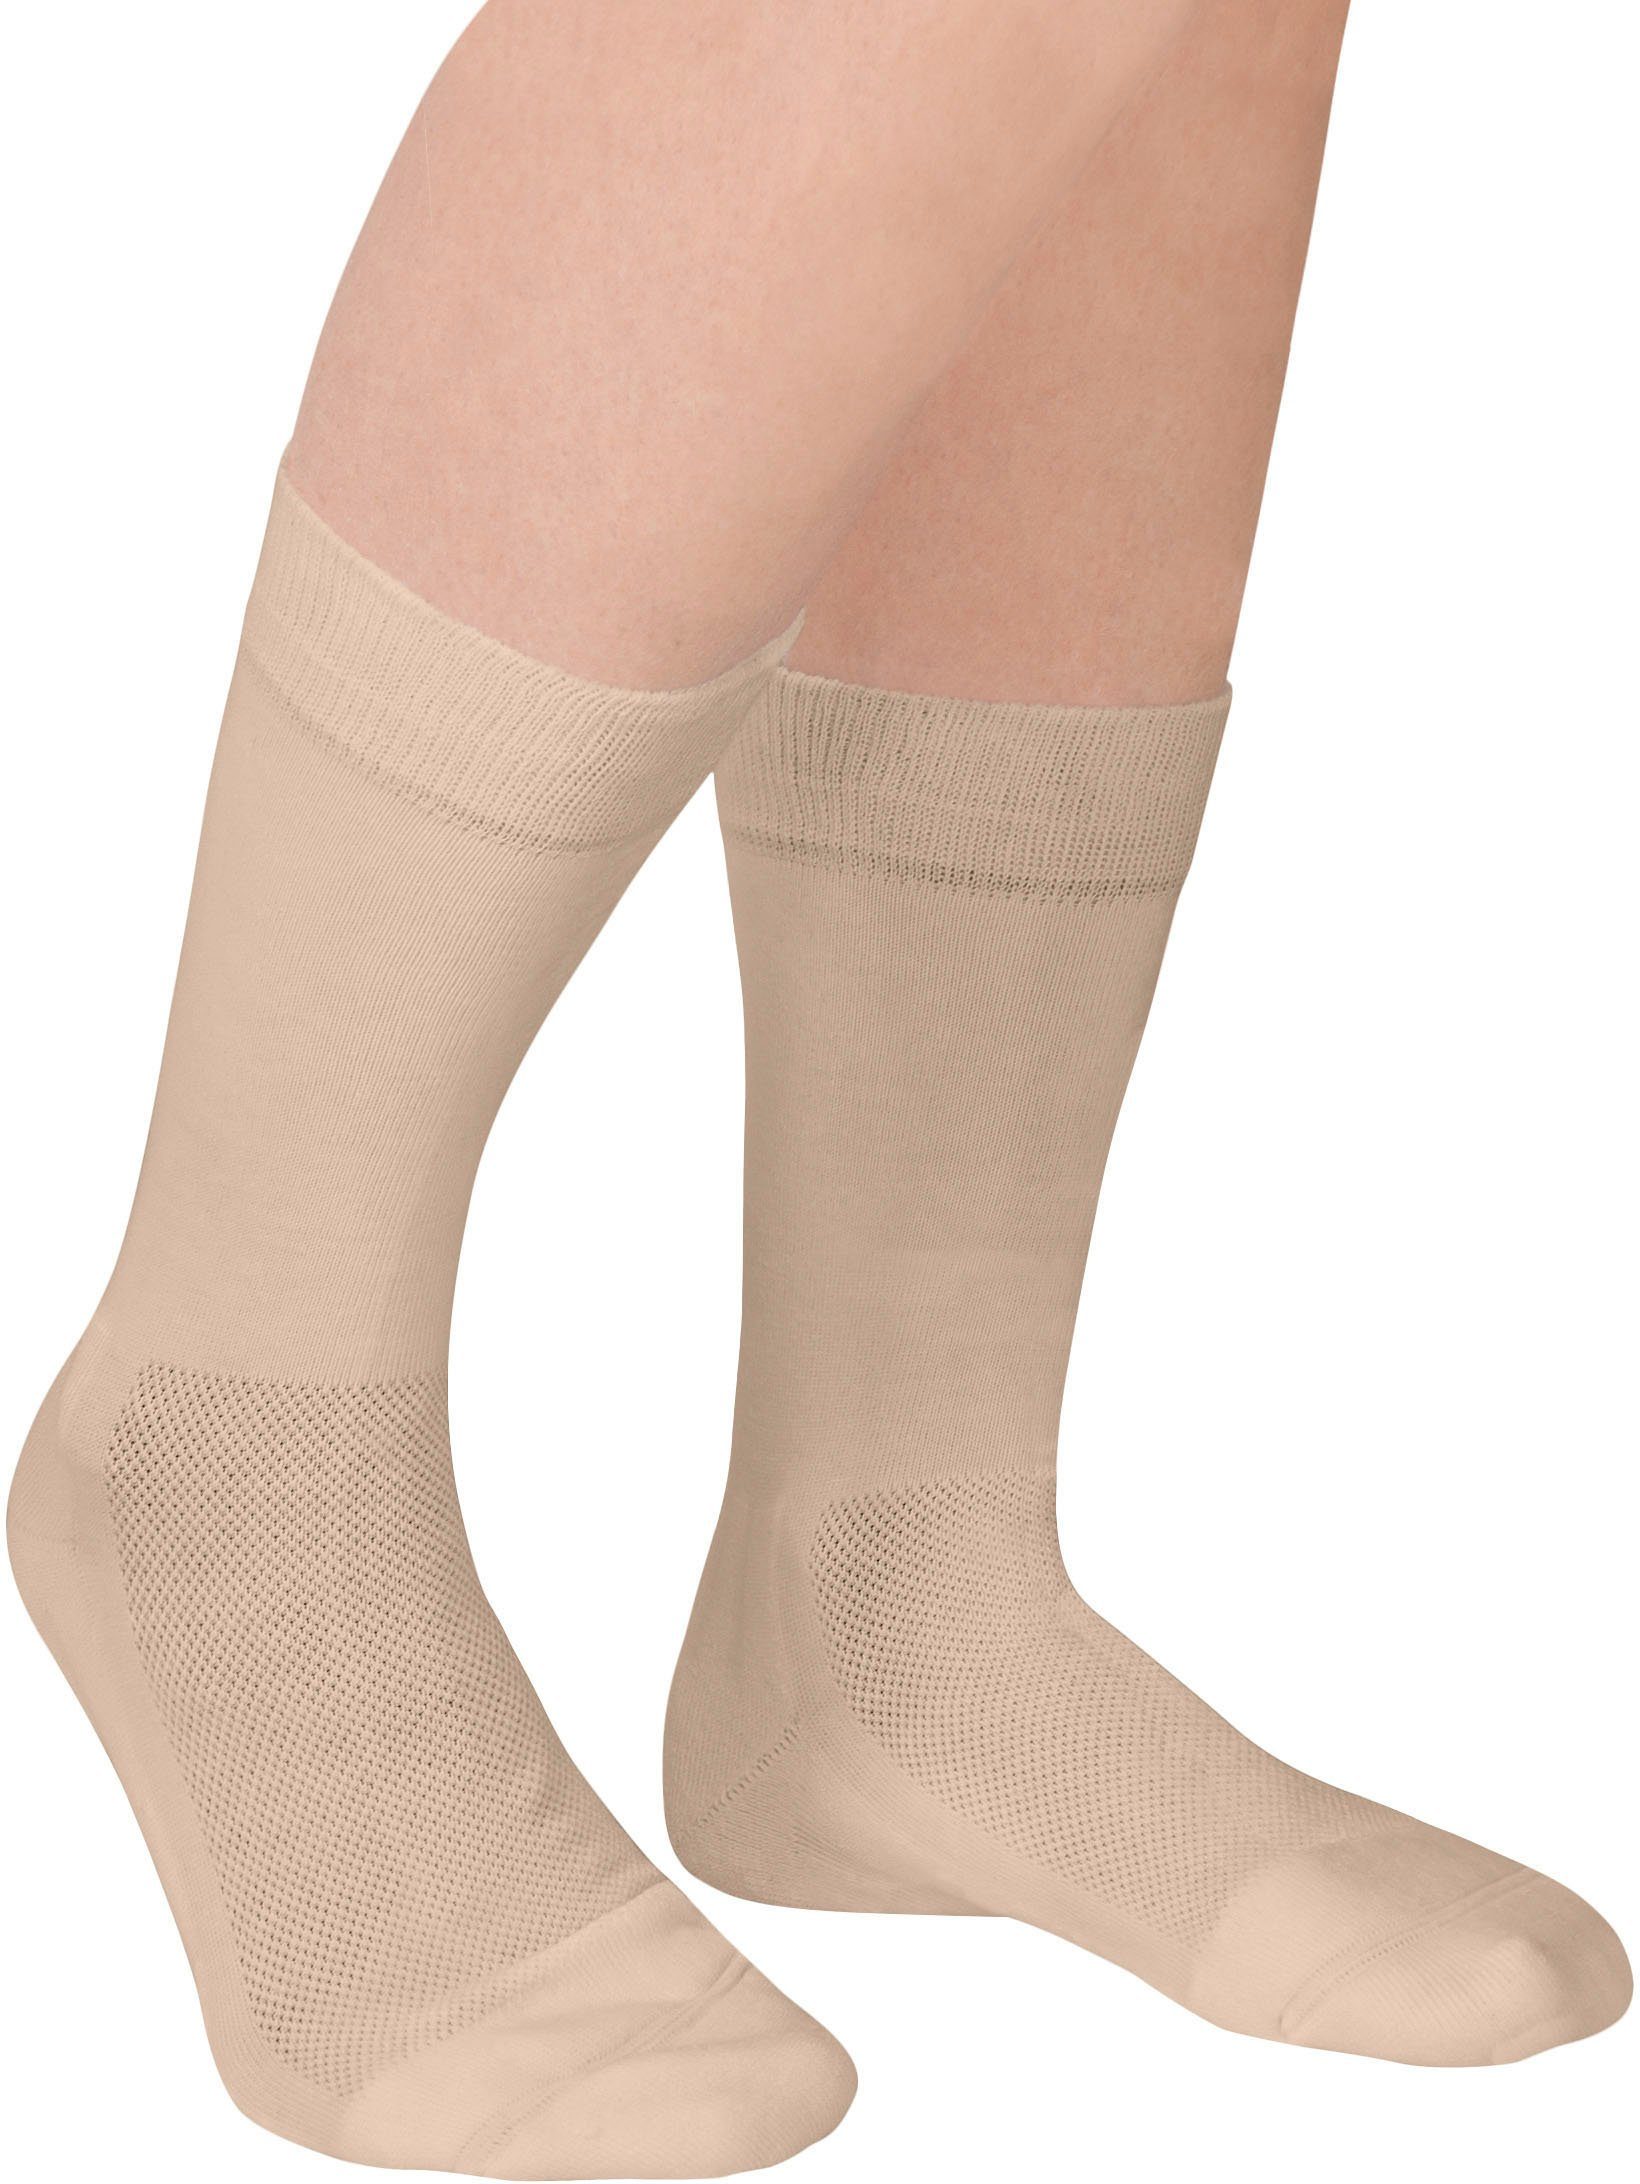 Venenfeund Diabetikersocken Fußgut Sensitiv (2-Paar) Socken beige